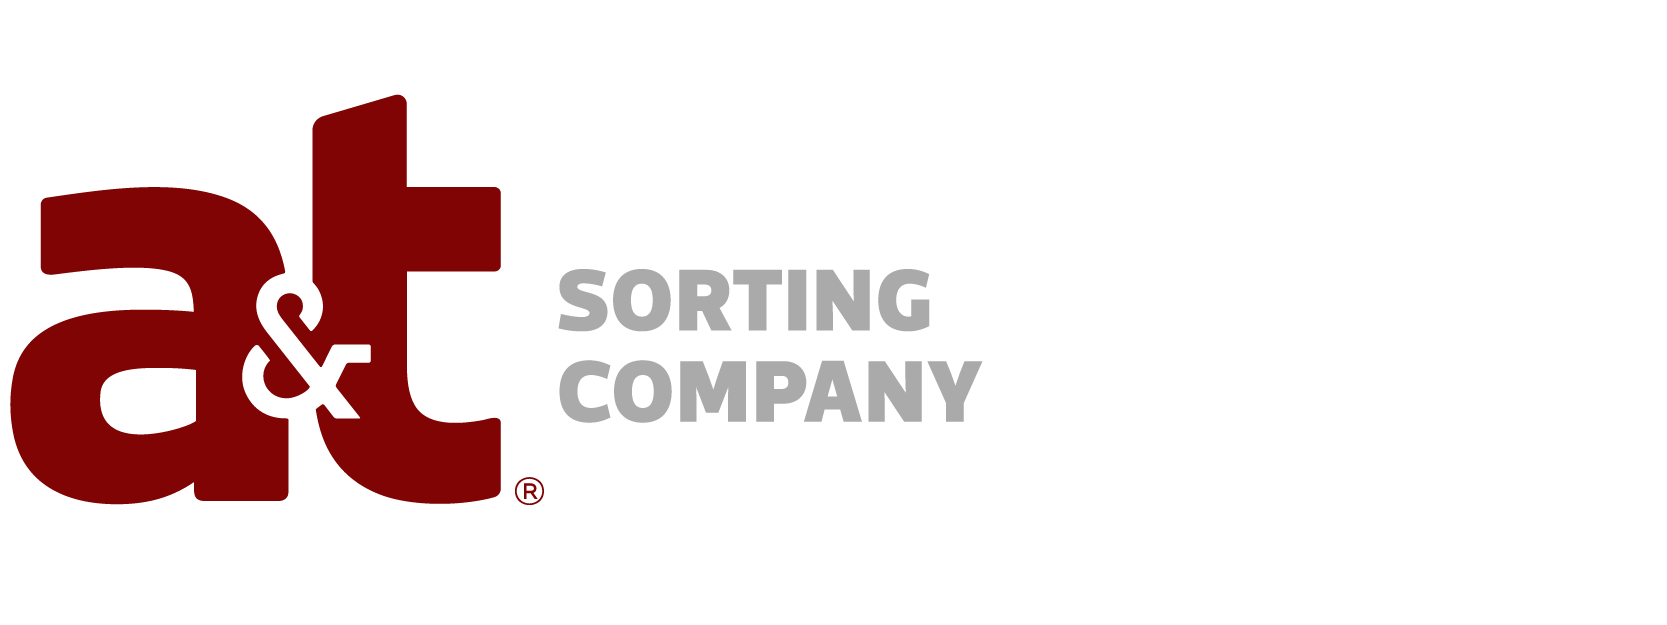 logo sorting company